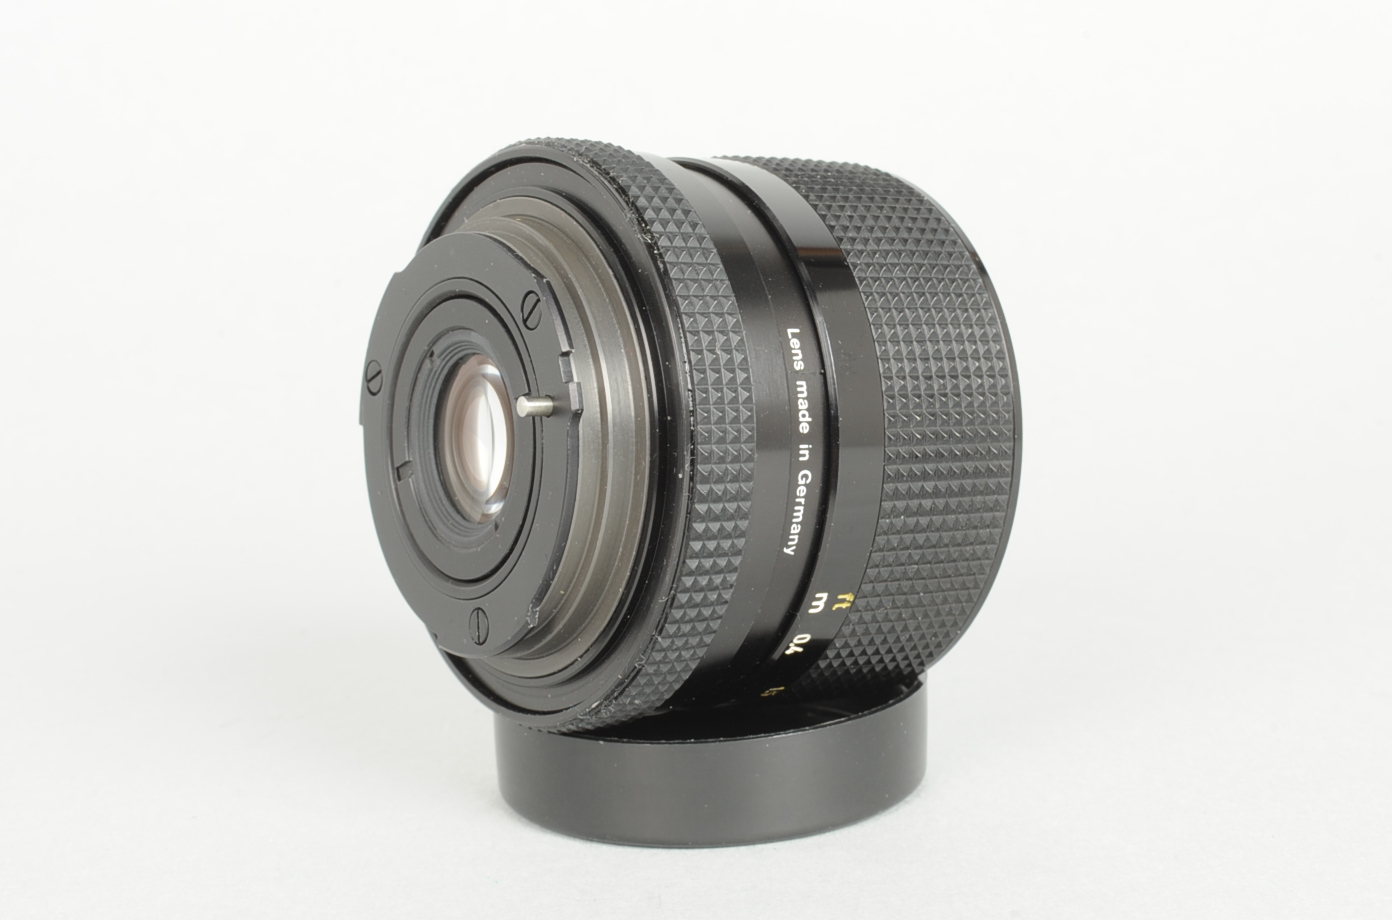 A Rollei HFT 35mm f/2.8 Distagon Lens, QBM mount, serial no 1811373, barrel VG, elements VG, - Image 2 of 4